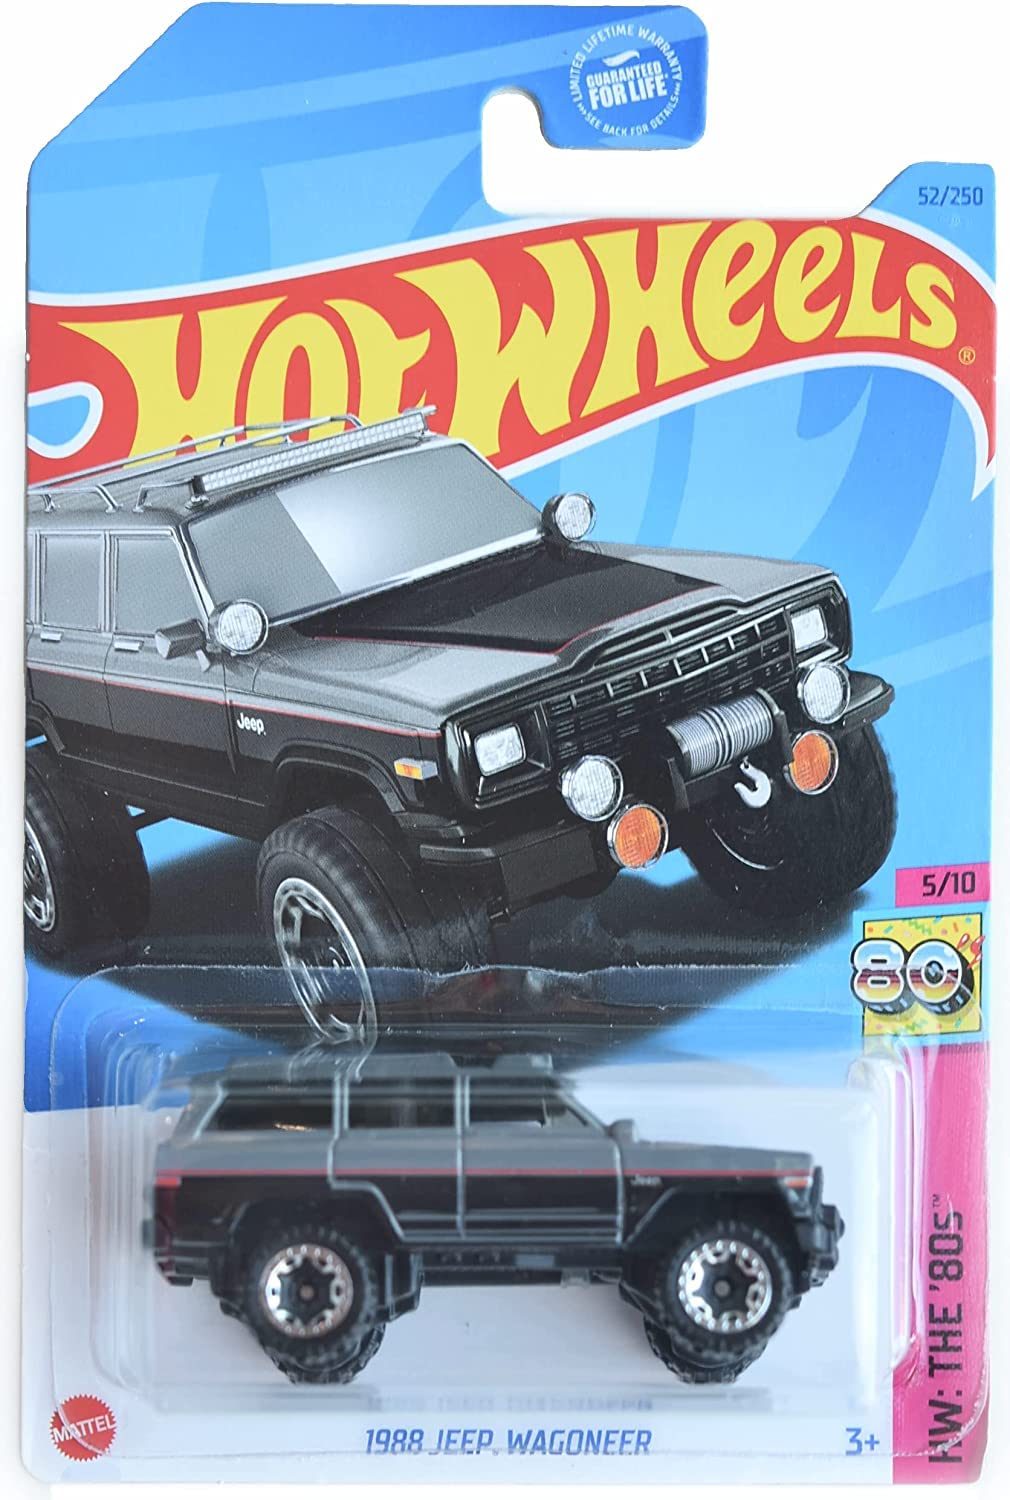 Hot Wheels The '80s 5/10 GREY 1988 Jeep Wagoneer 52/250